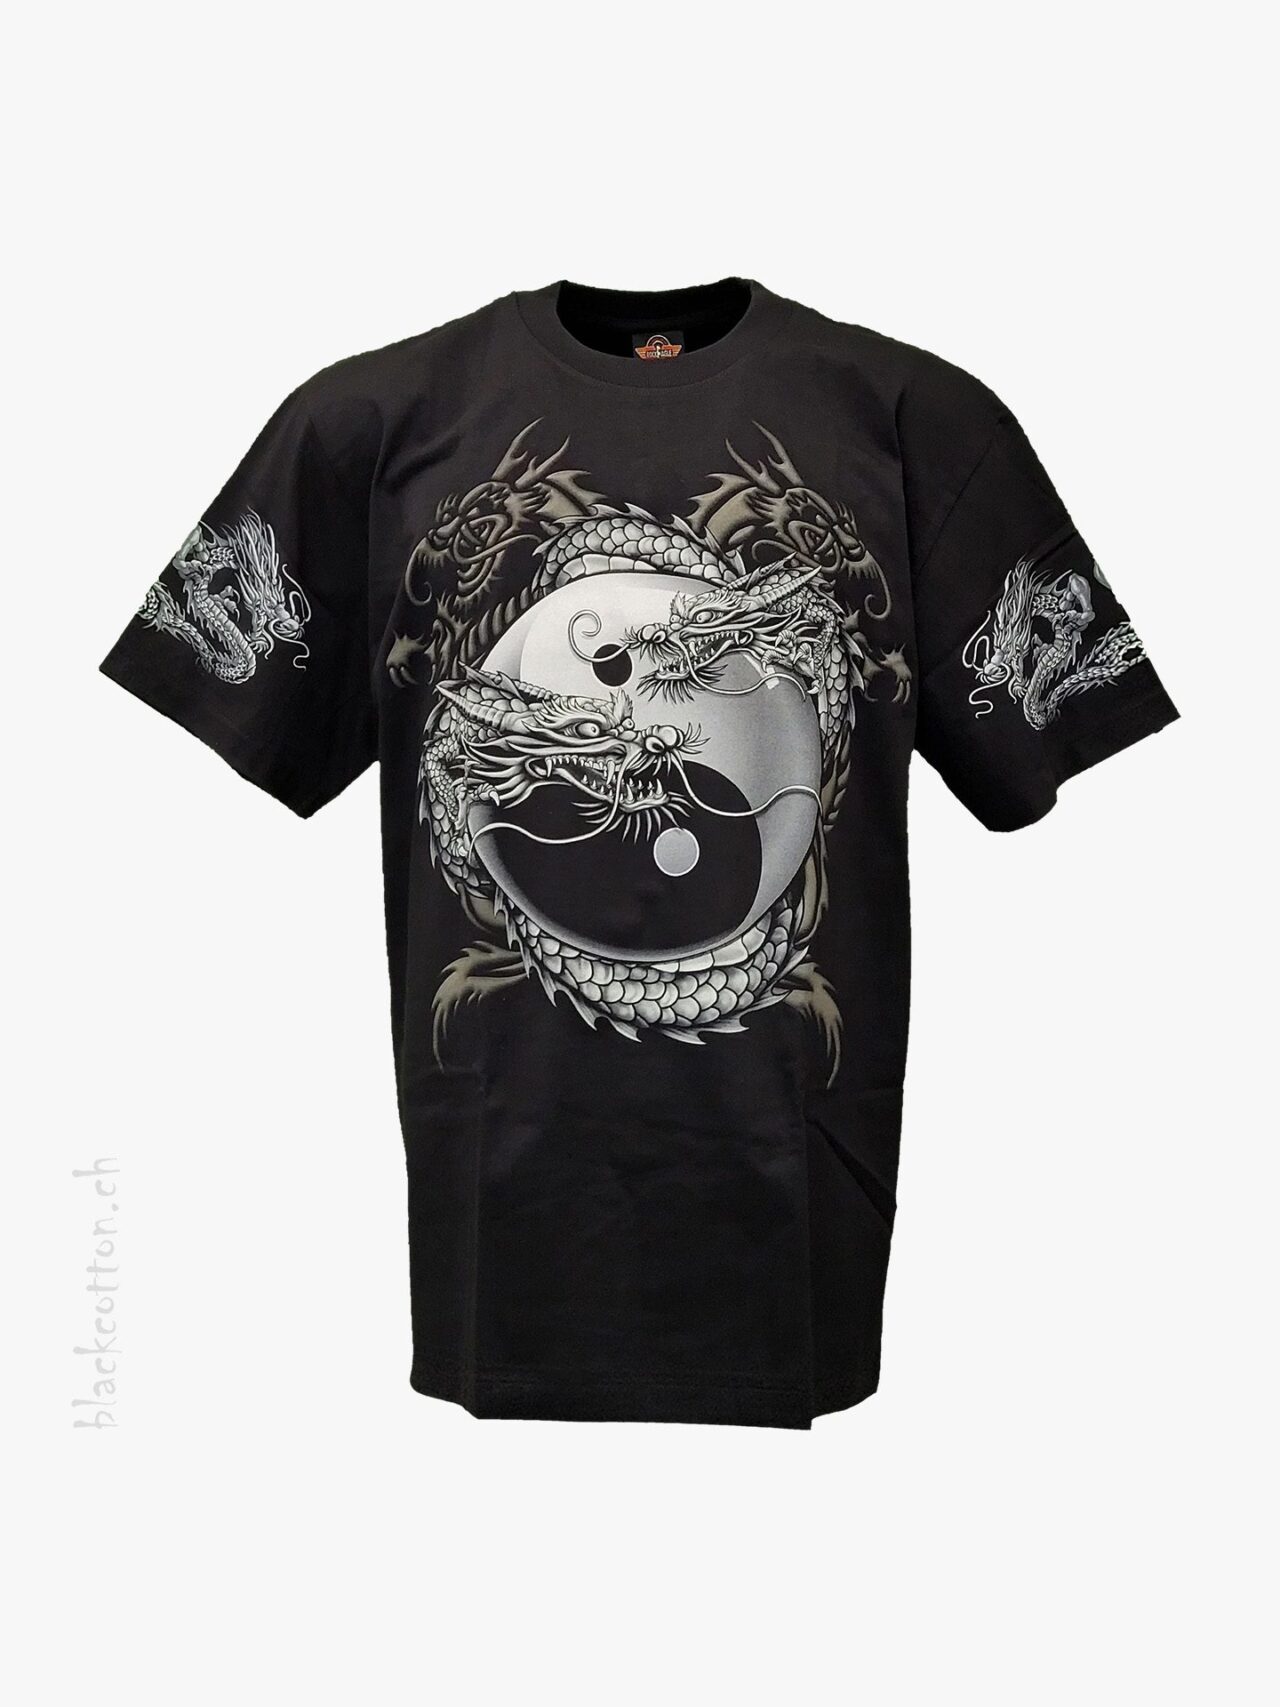 T-Shirt Drache Yin&Yang ROCK-EAGLE Glow in the Dark